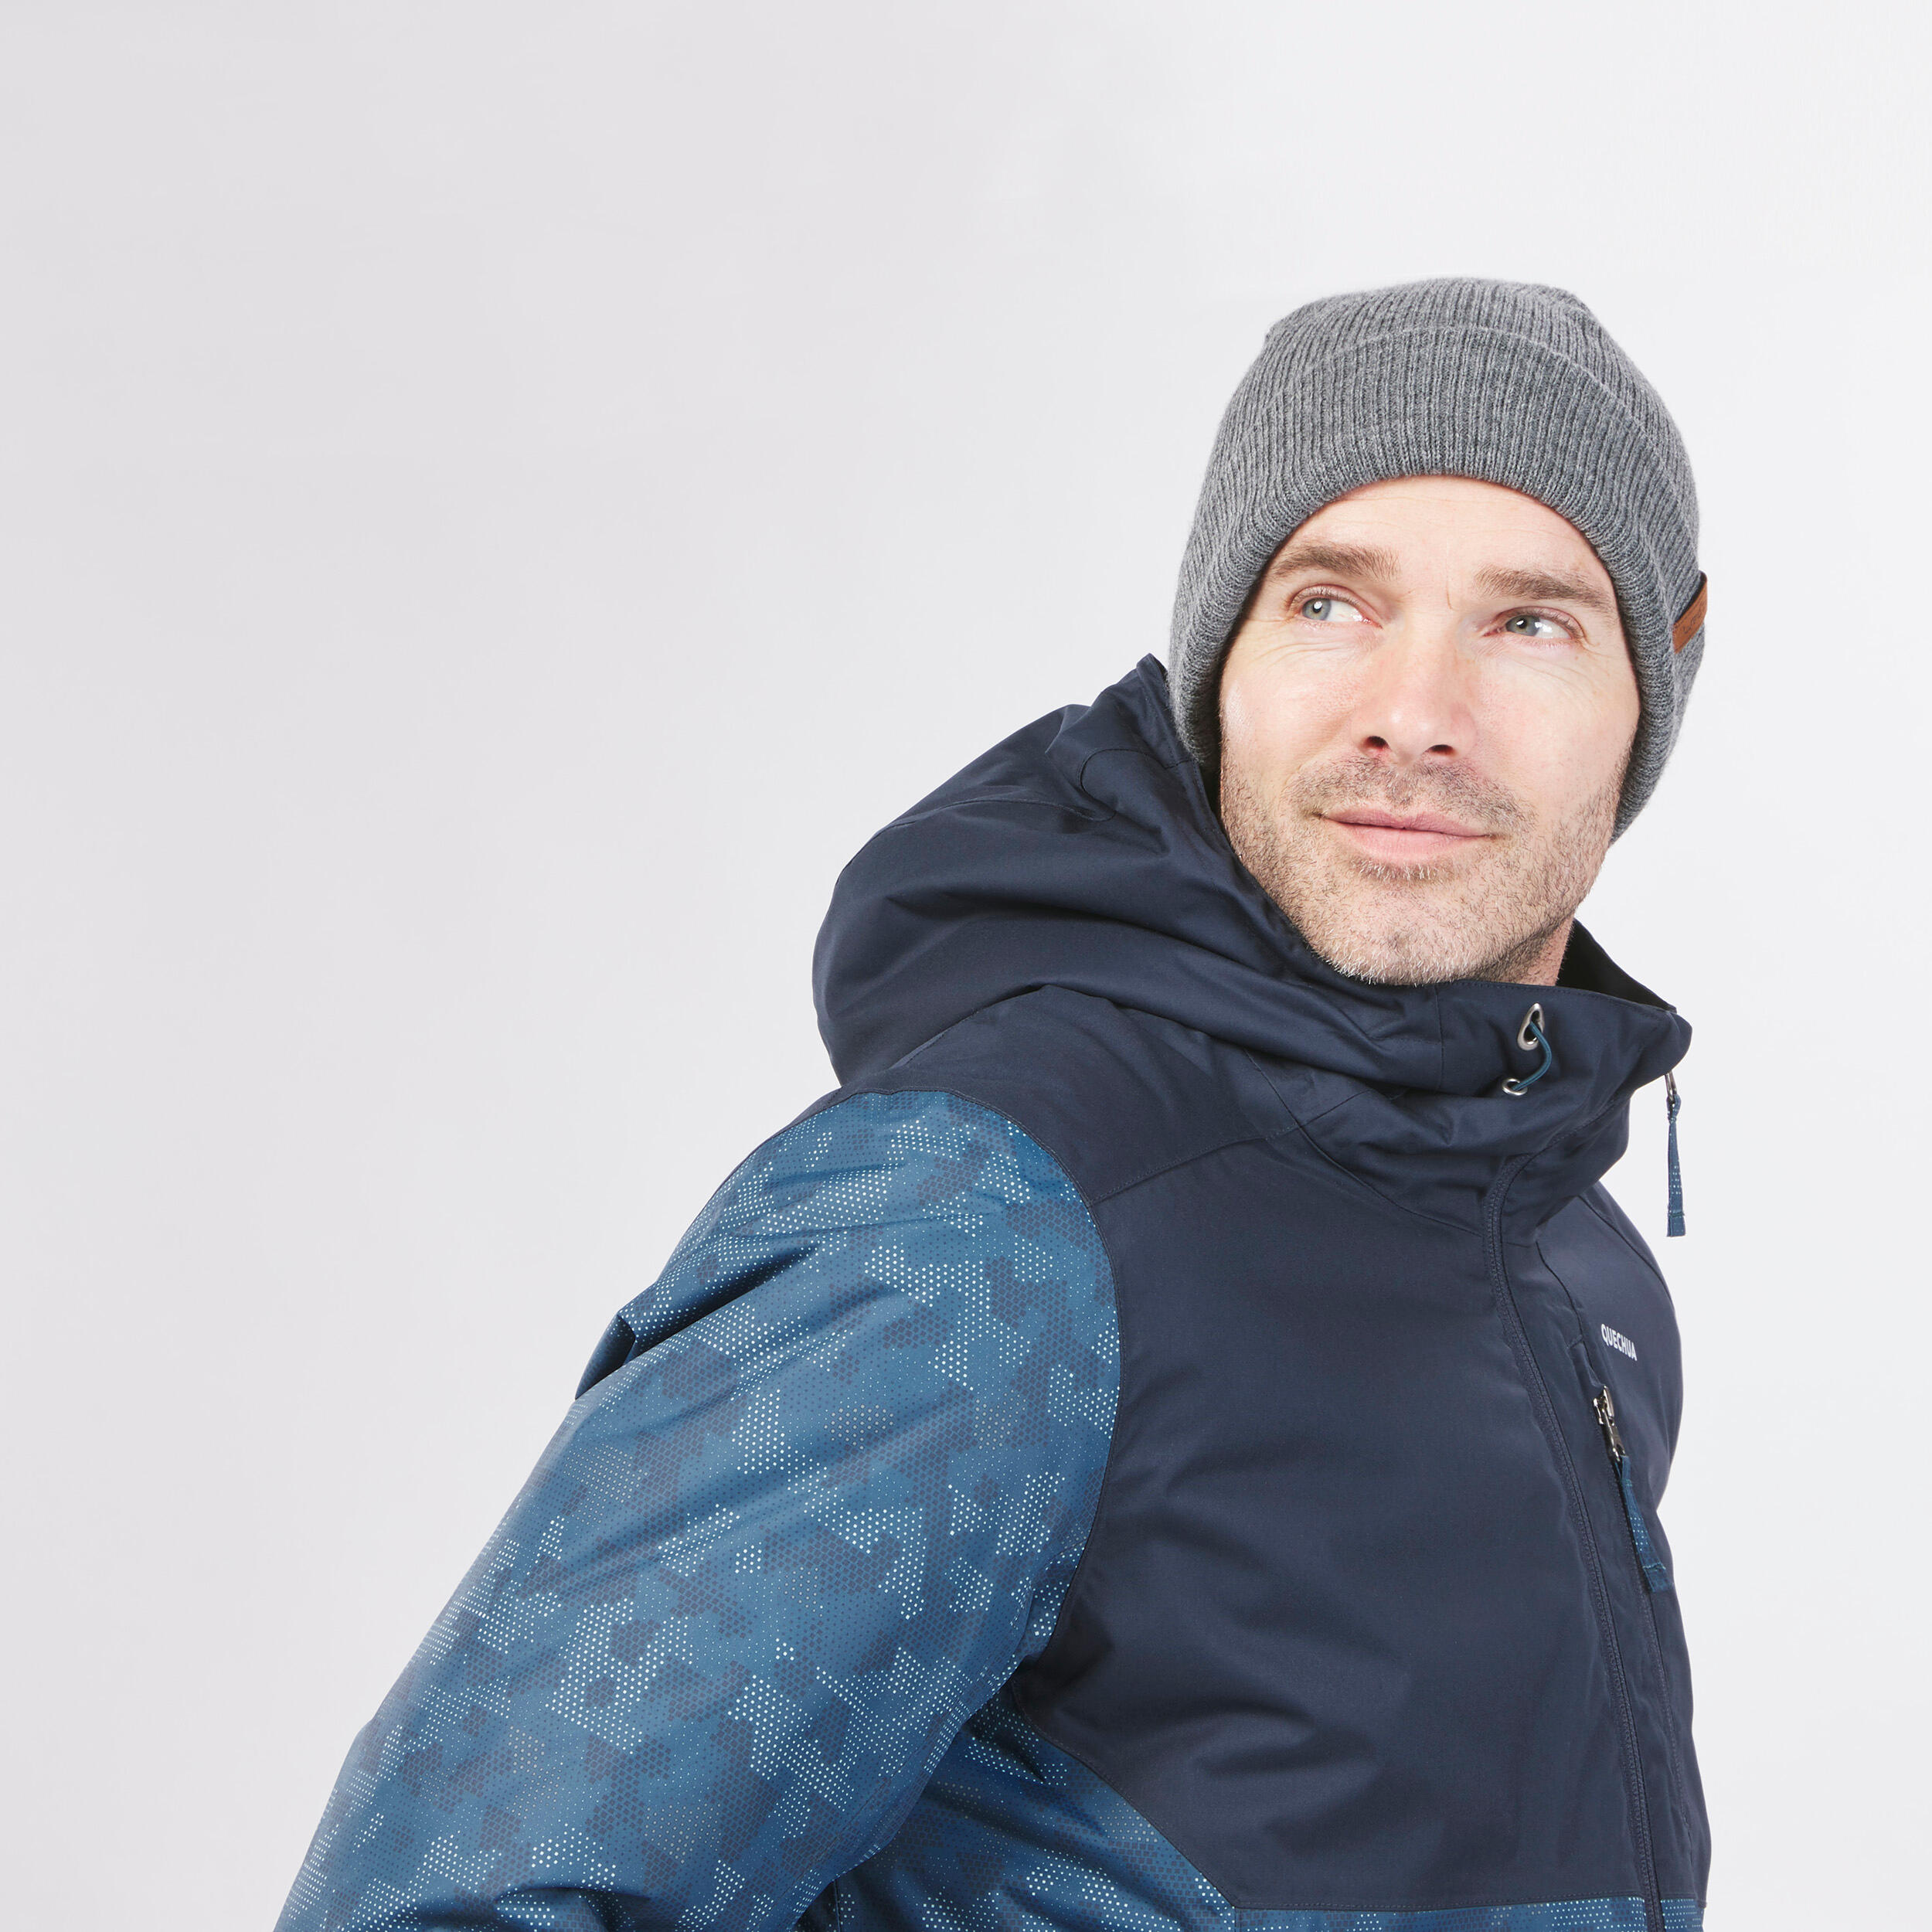 Men’s hiking waterproof winter jacket - SH500 -10°C 4/15